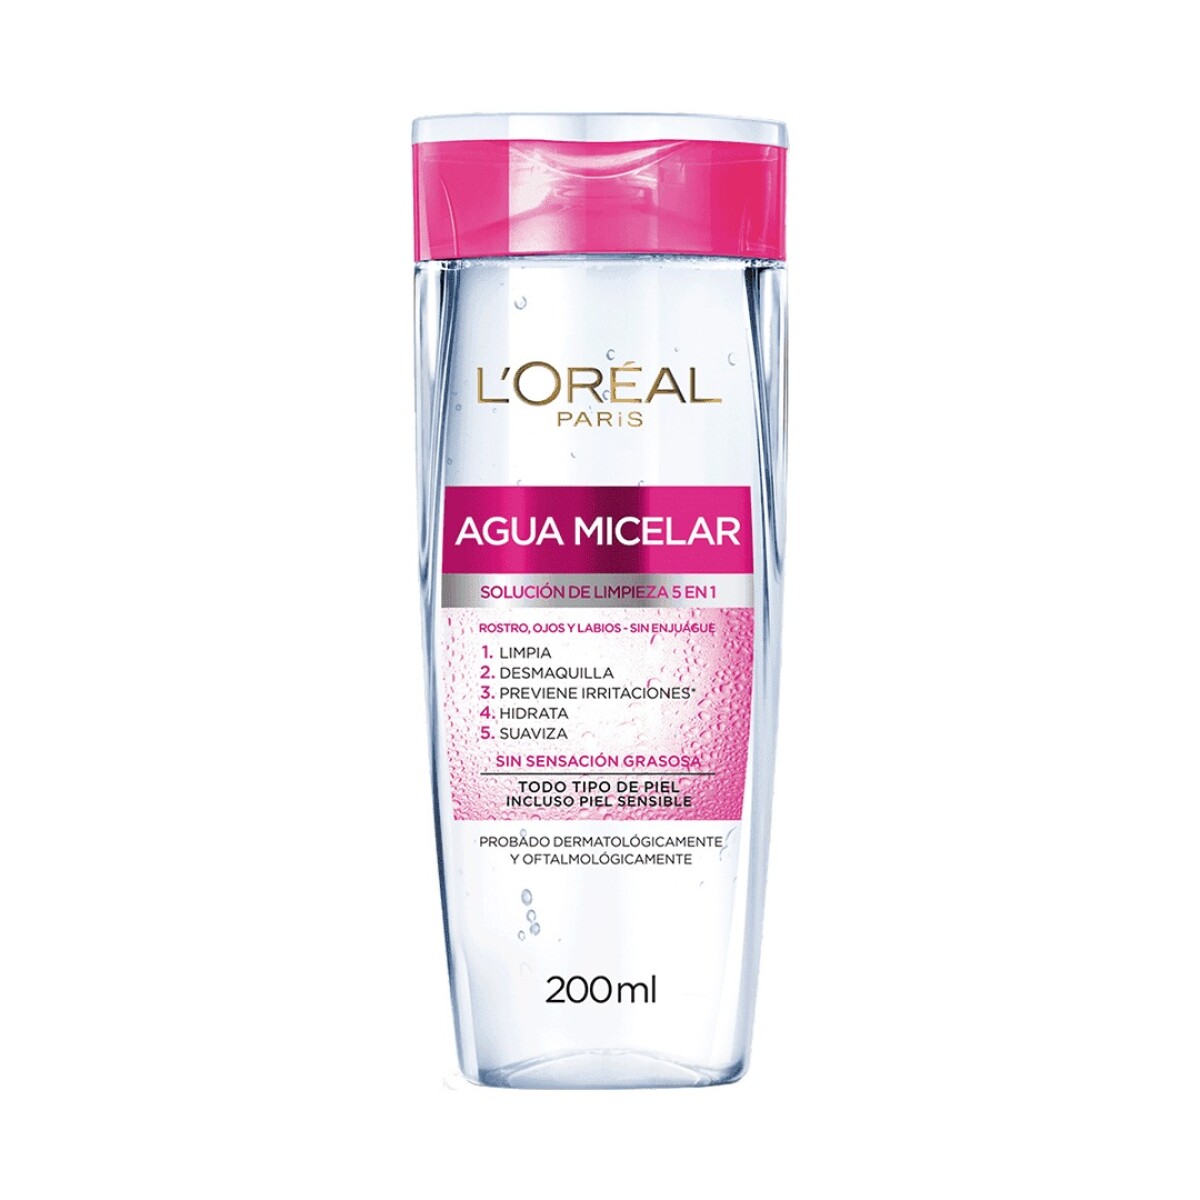 Agua Micelar L'Oréal Clásica de 200ml - 001 